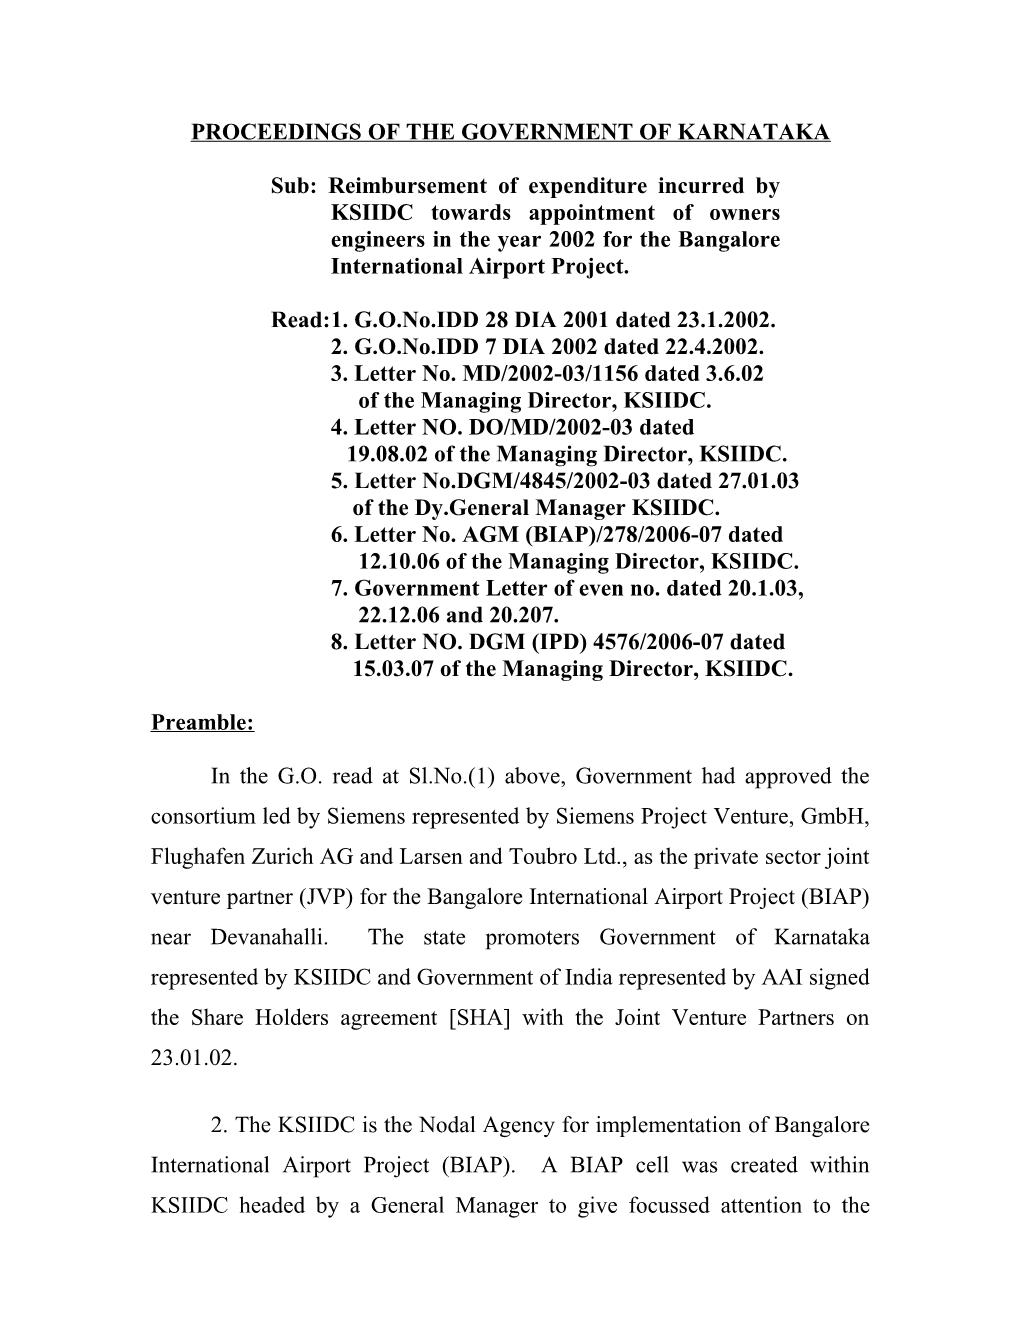 Proceedings of the Government of Karnataka s1